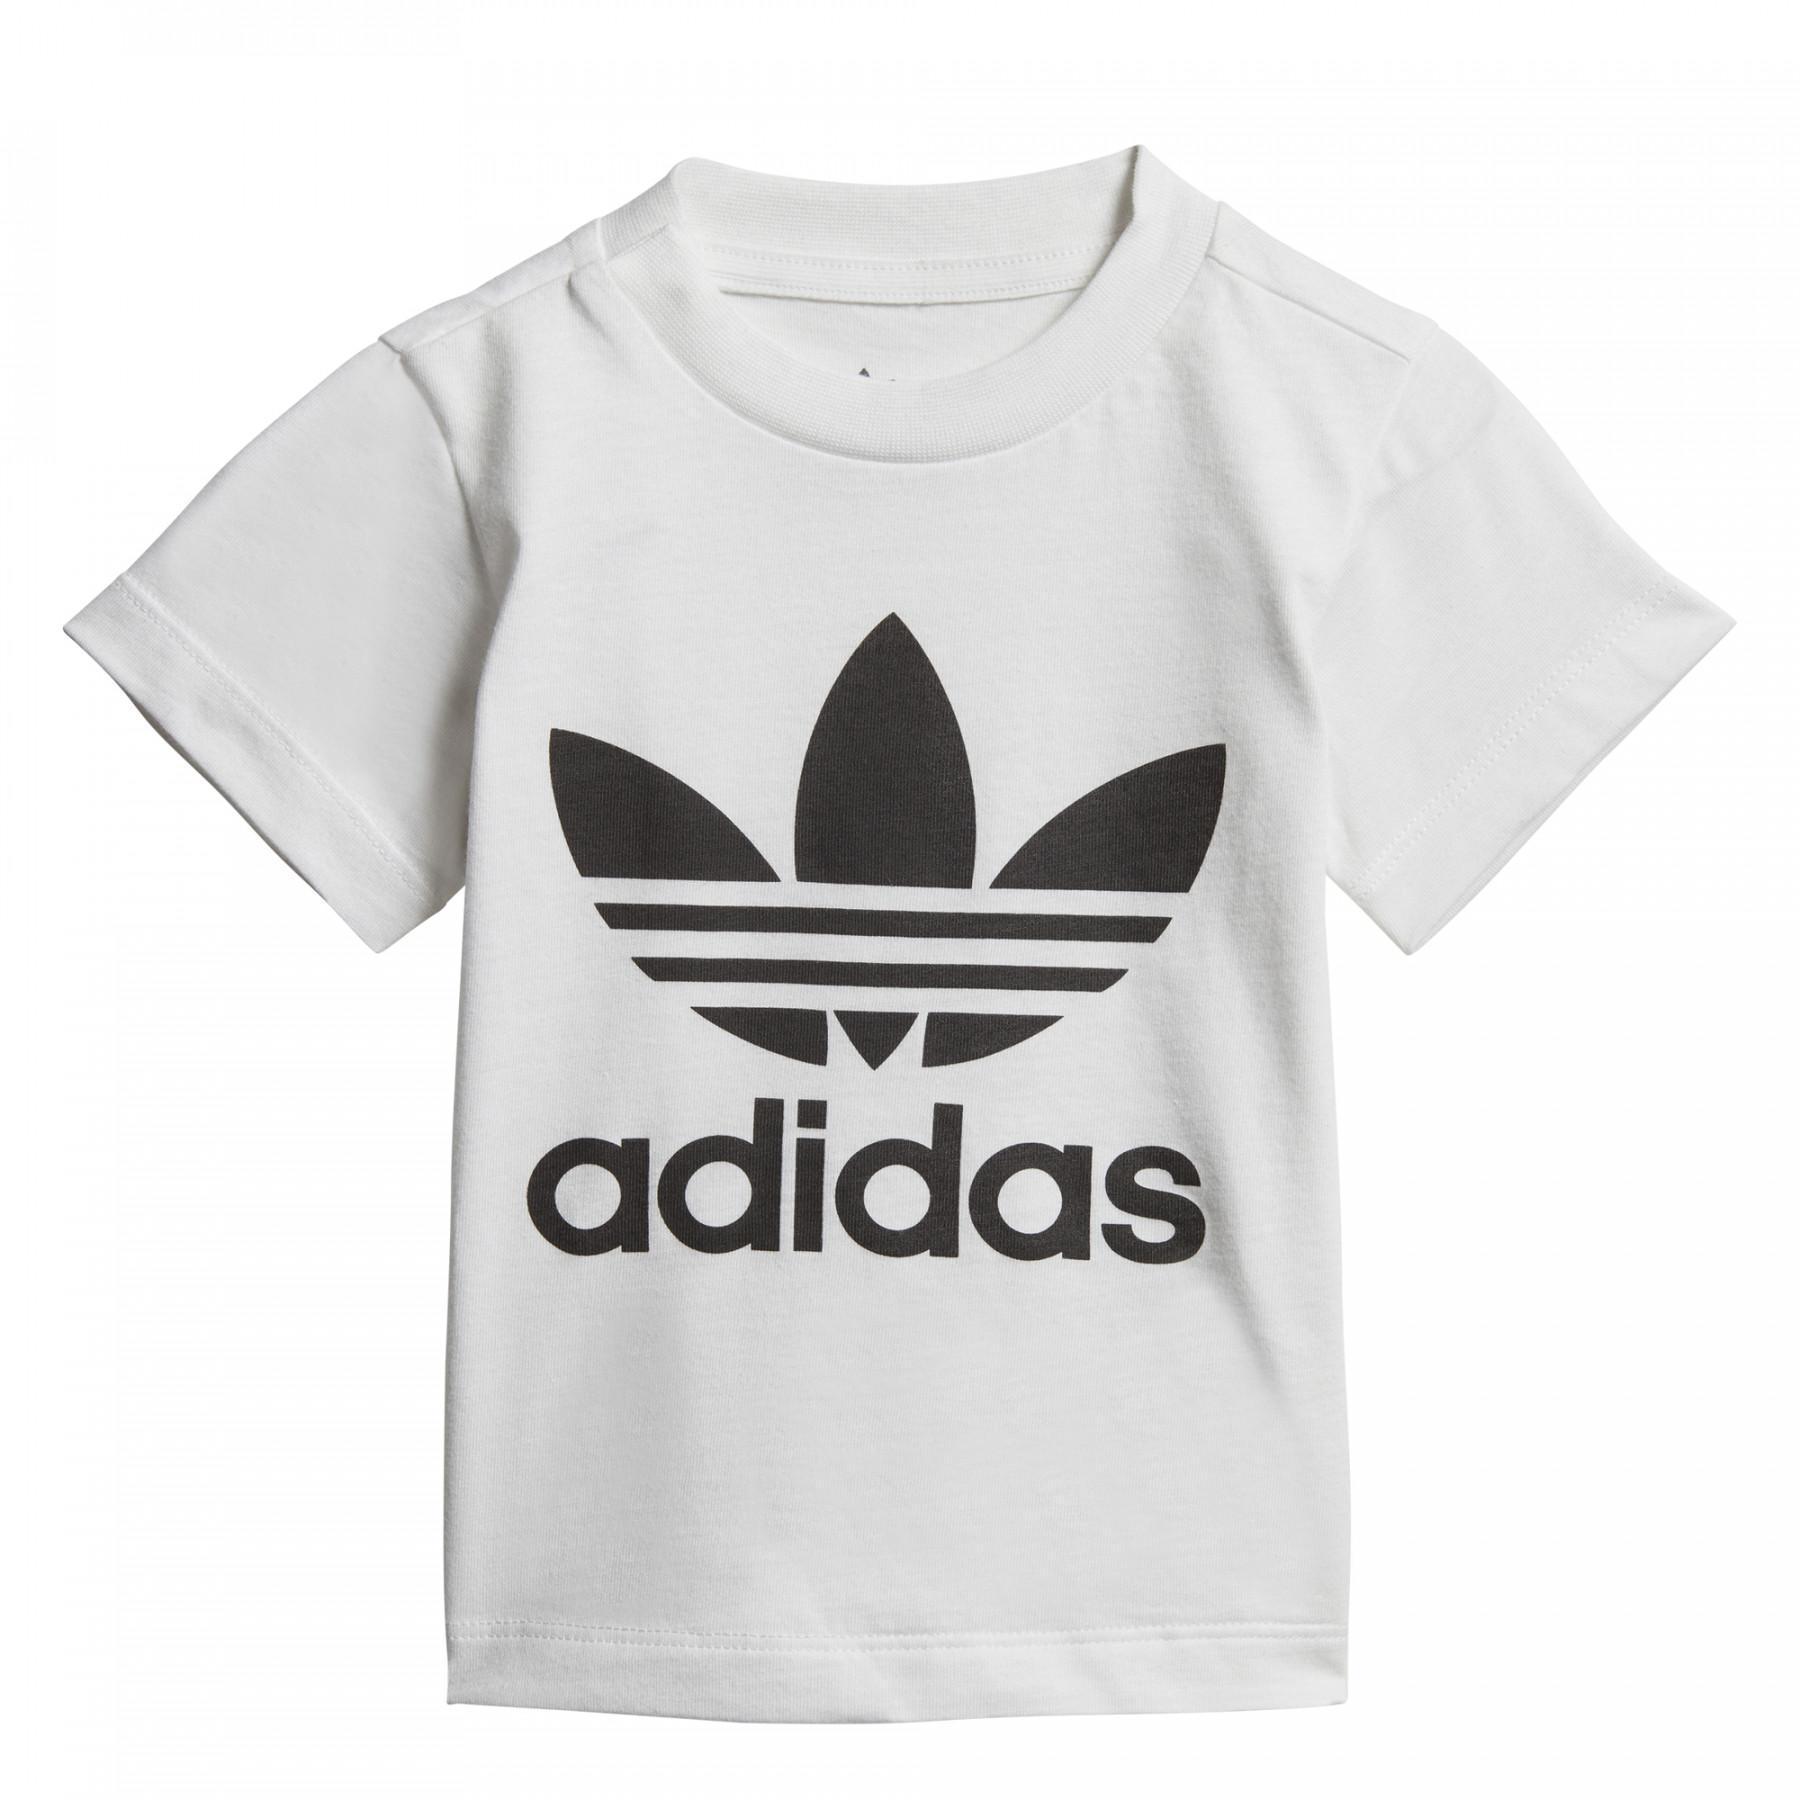 Baby T-shirt adidas Trefoil